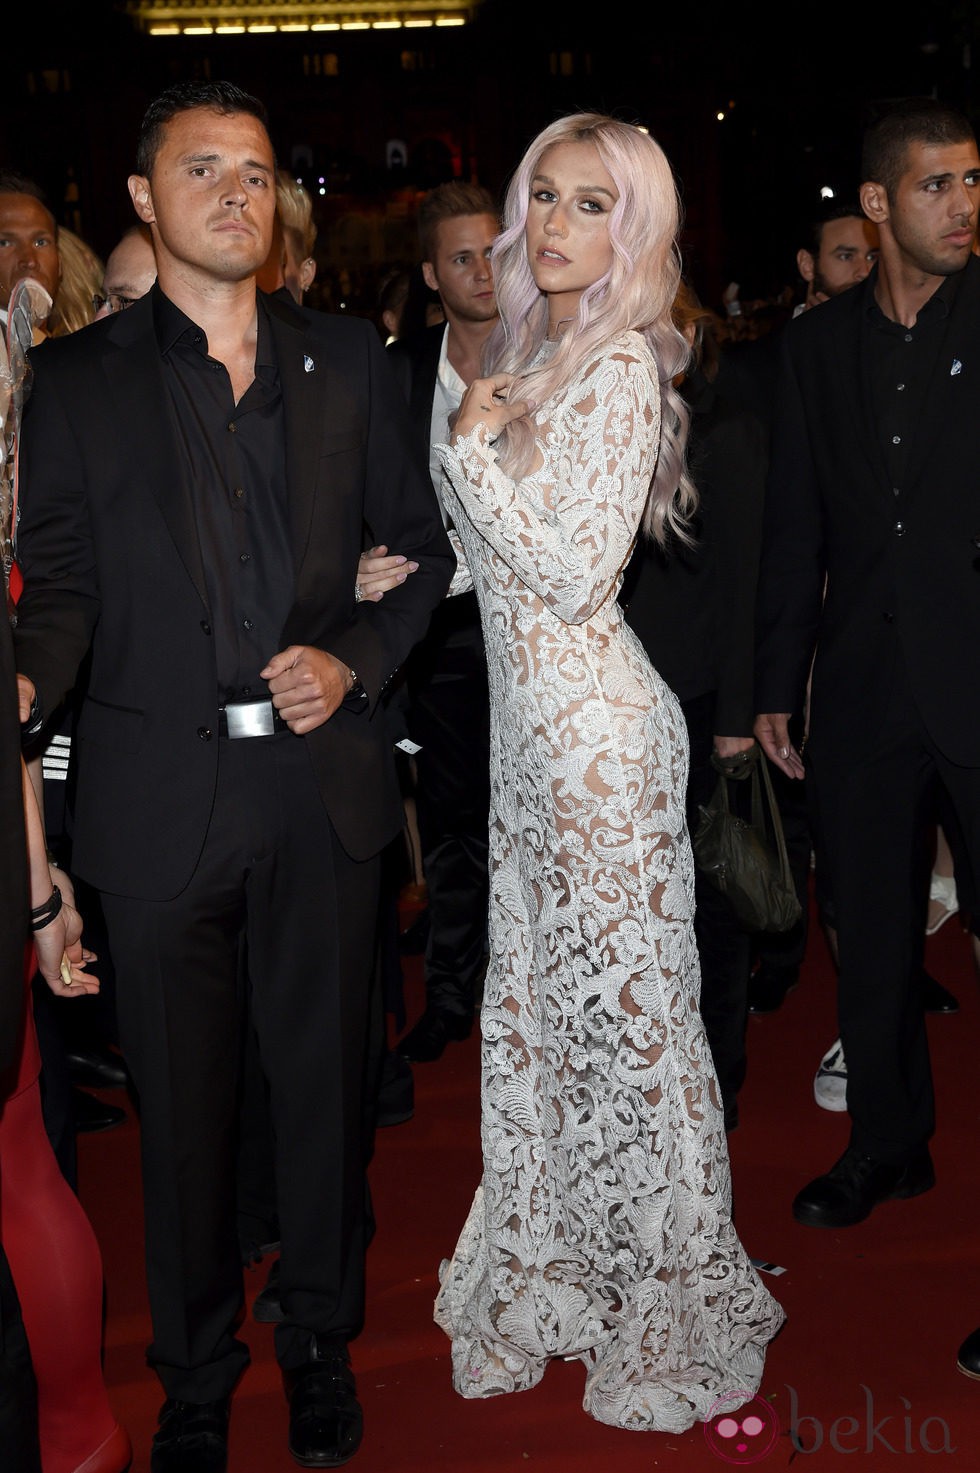 Kesha en la gala Life Ball 2014 de Viena.